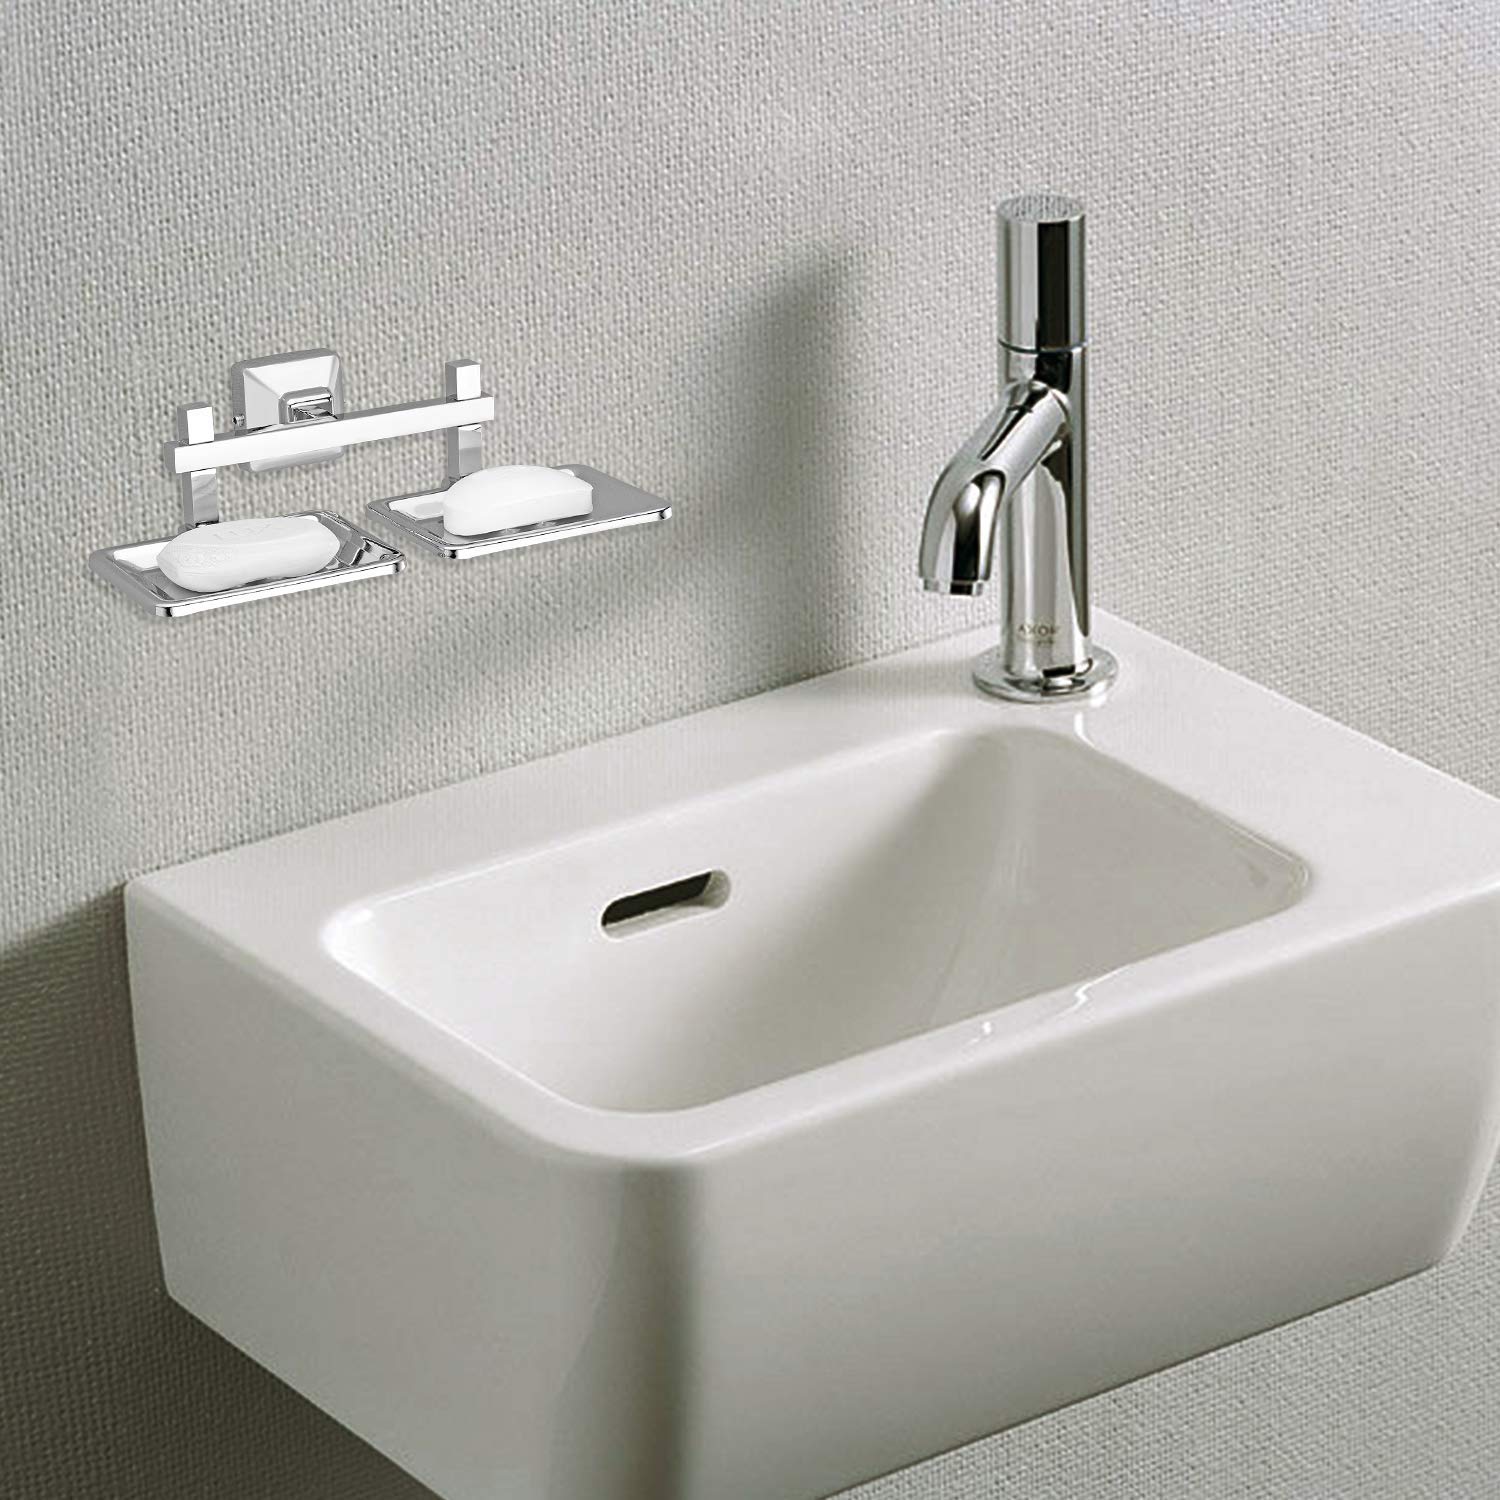 Plantex Stainless Steel 304 Grade Squaro Soap Holder for Bathroom/Double Soap Dish(Chrome) - Pack of 3